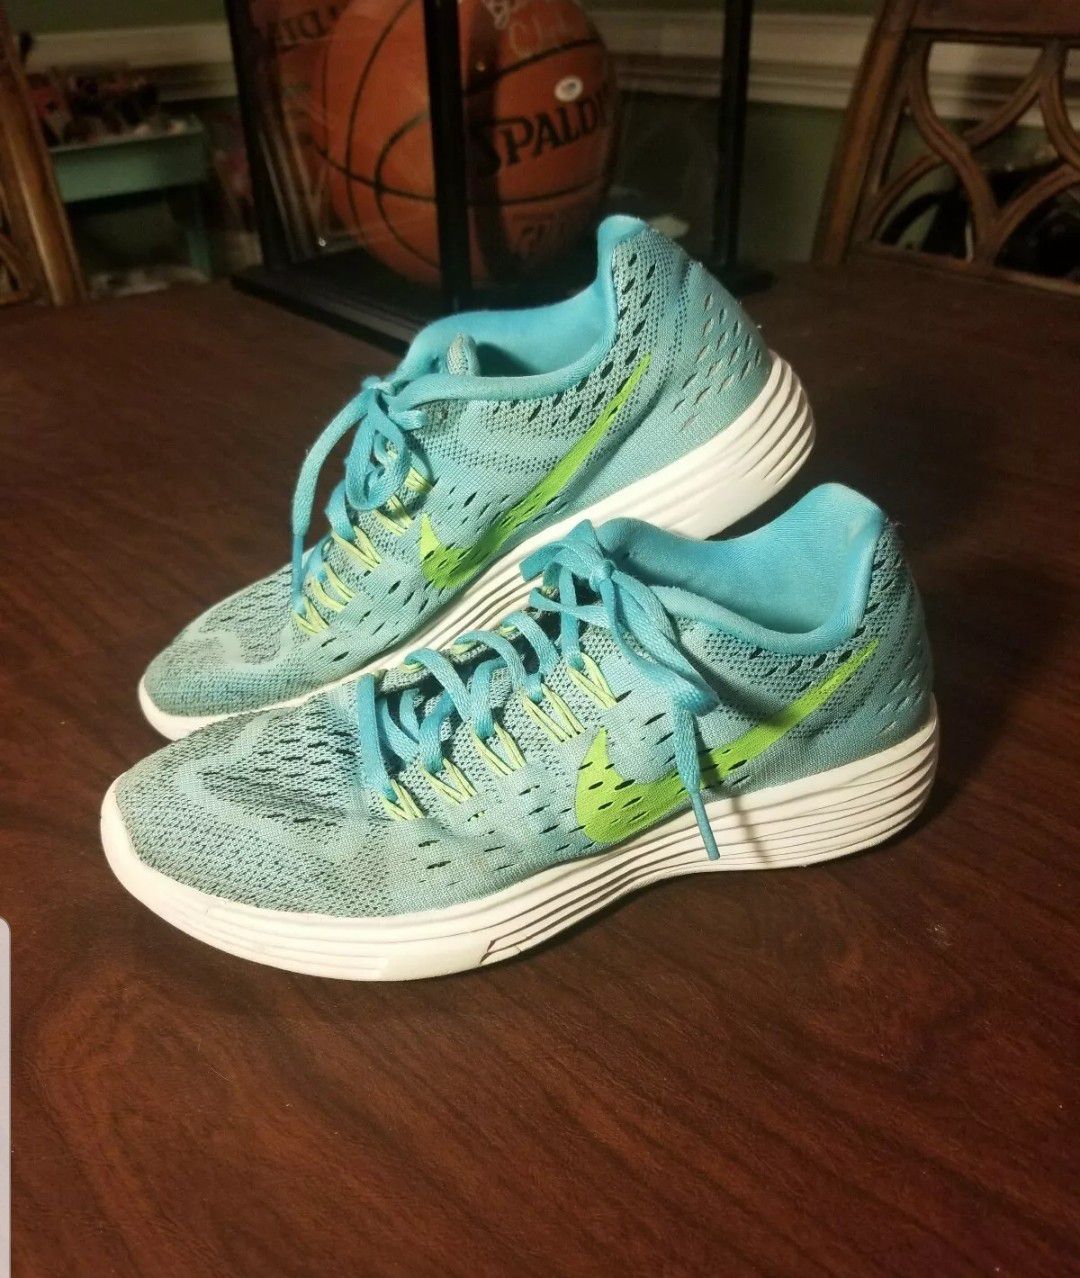 Nike Lunartempo Womens Size 7.5 Running Shoes Blue/Green 705462-400